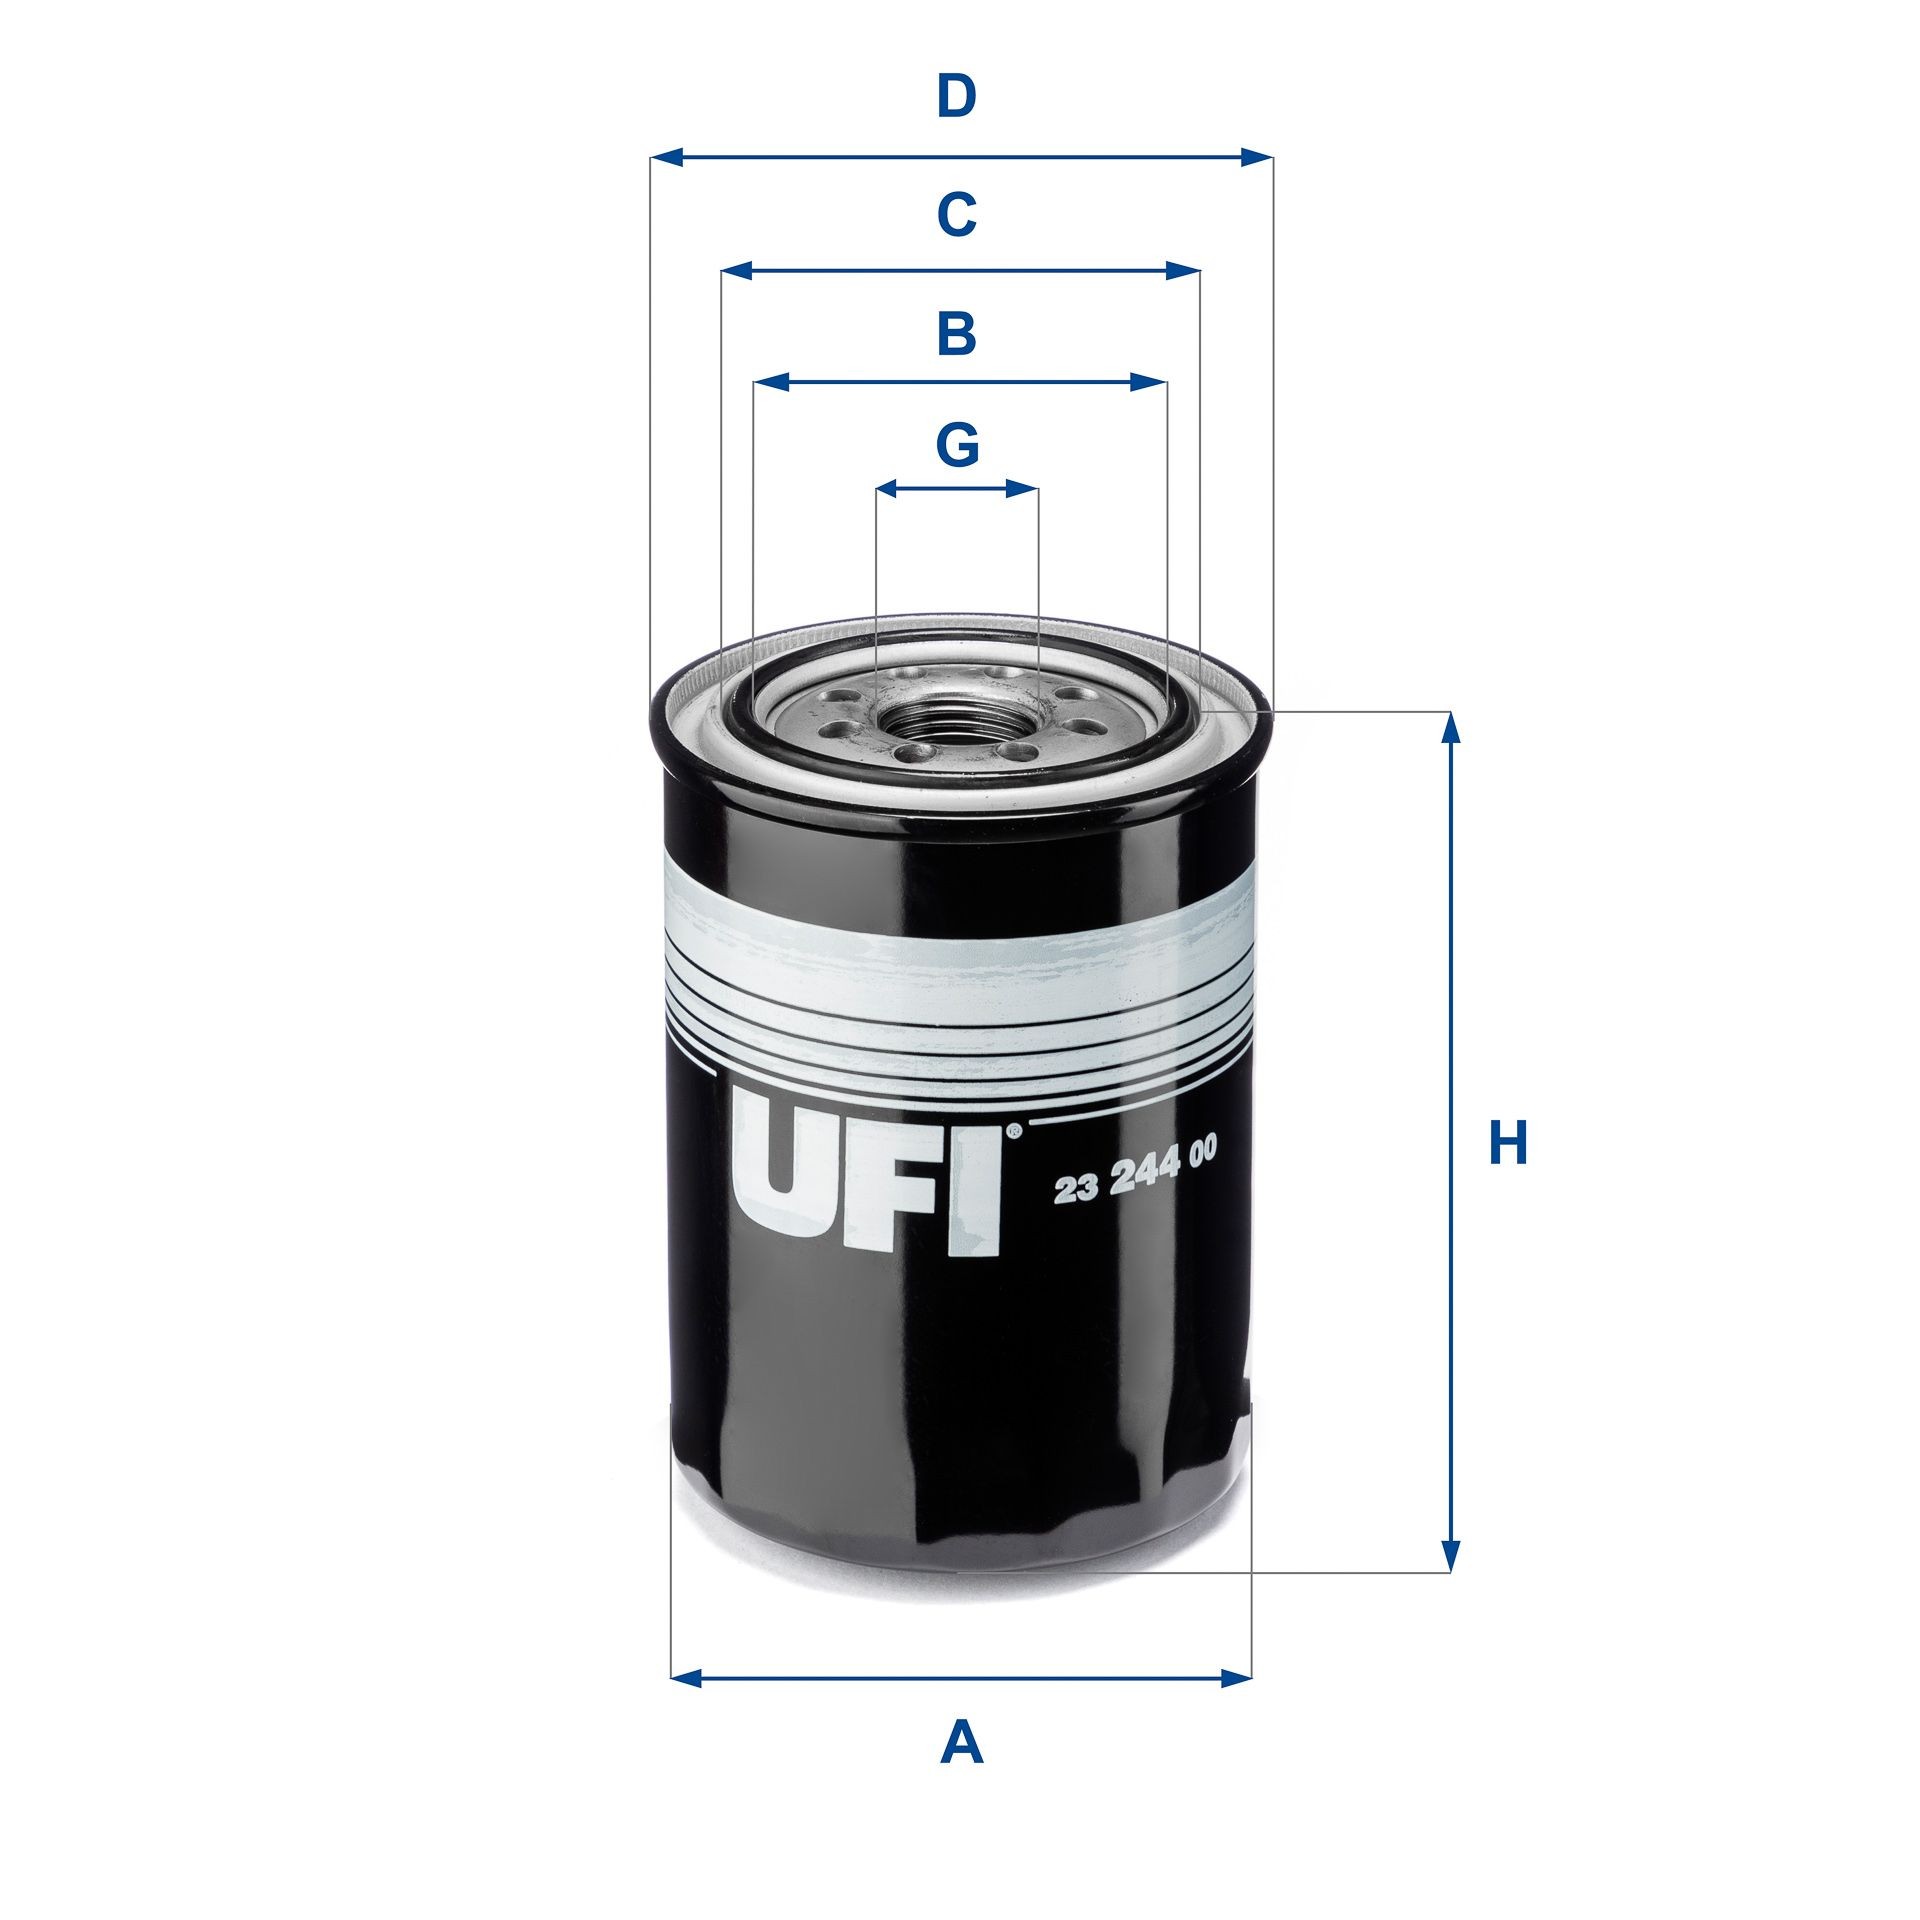 Original UFI Oil filter 23.244.00 for NISSAN ALMERA